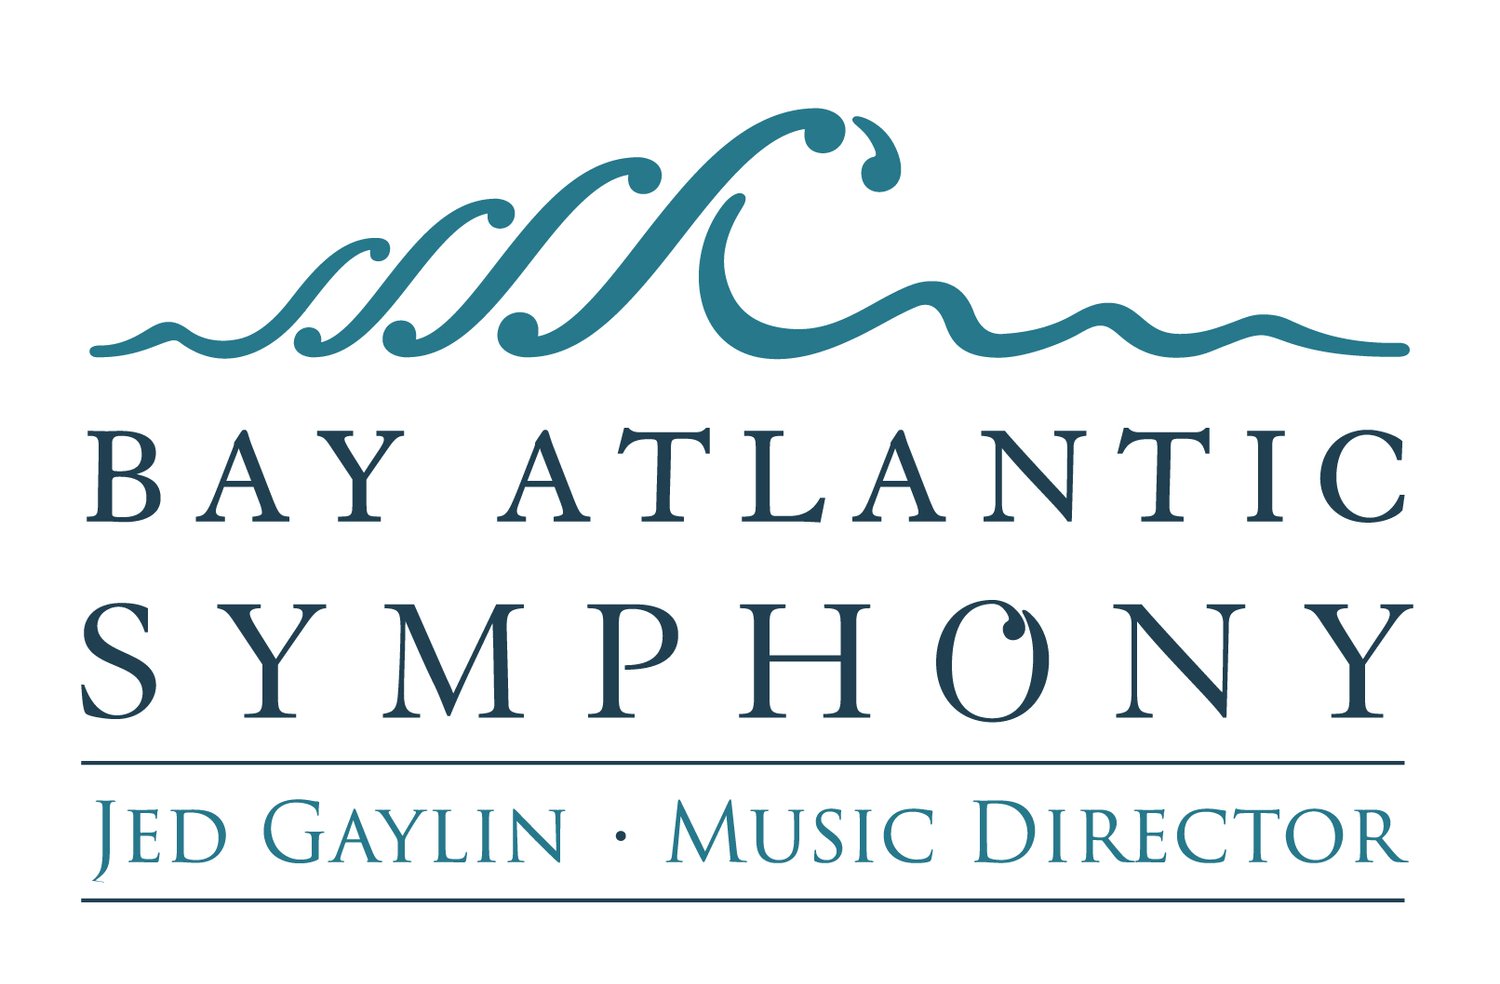 Bay Atlantic Symphony